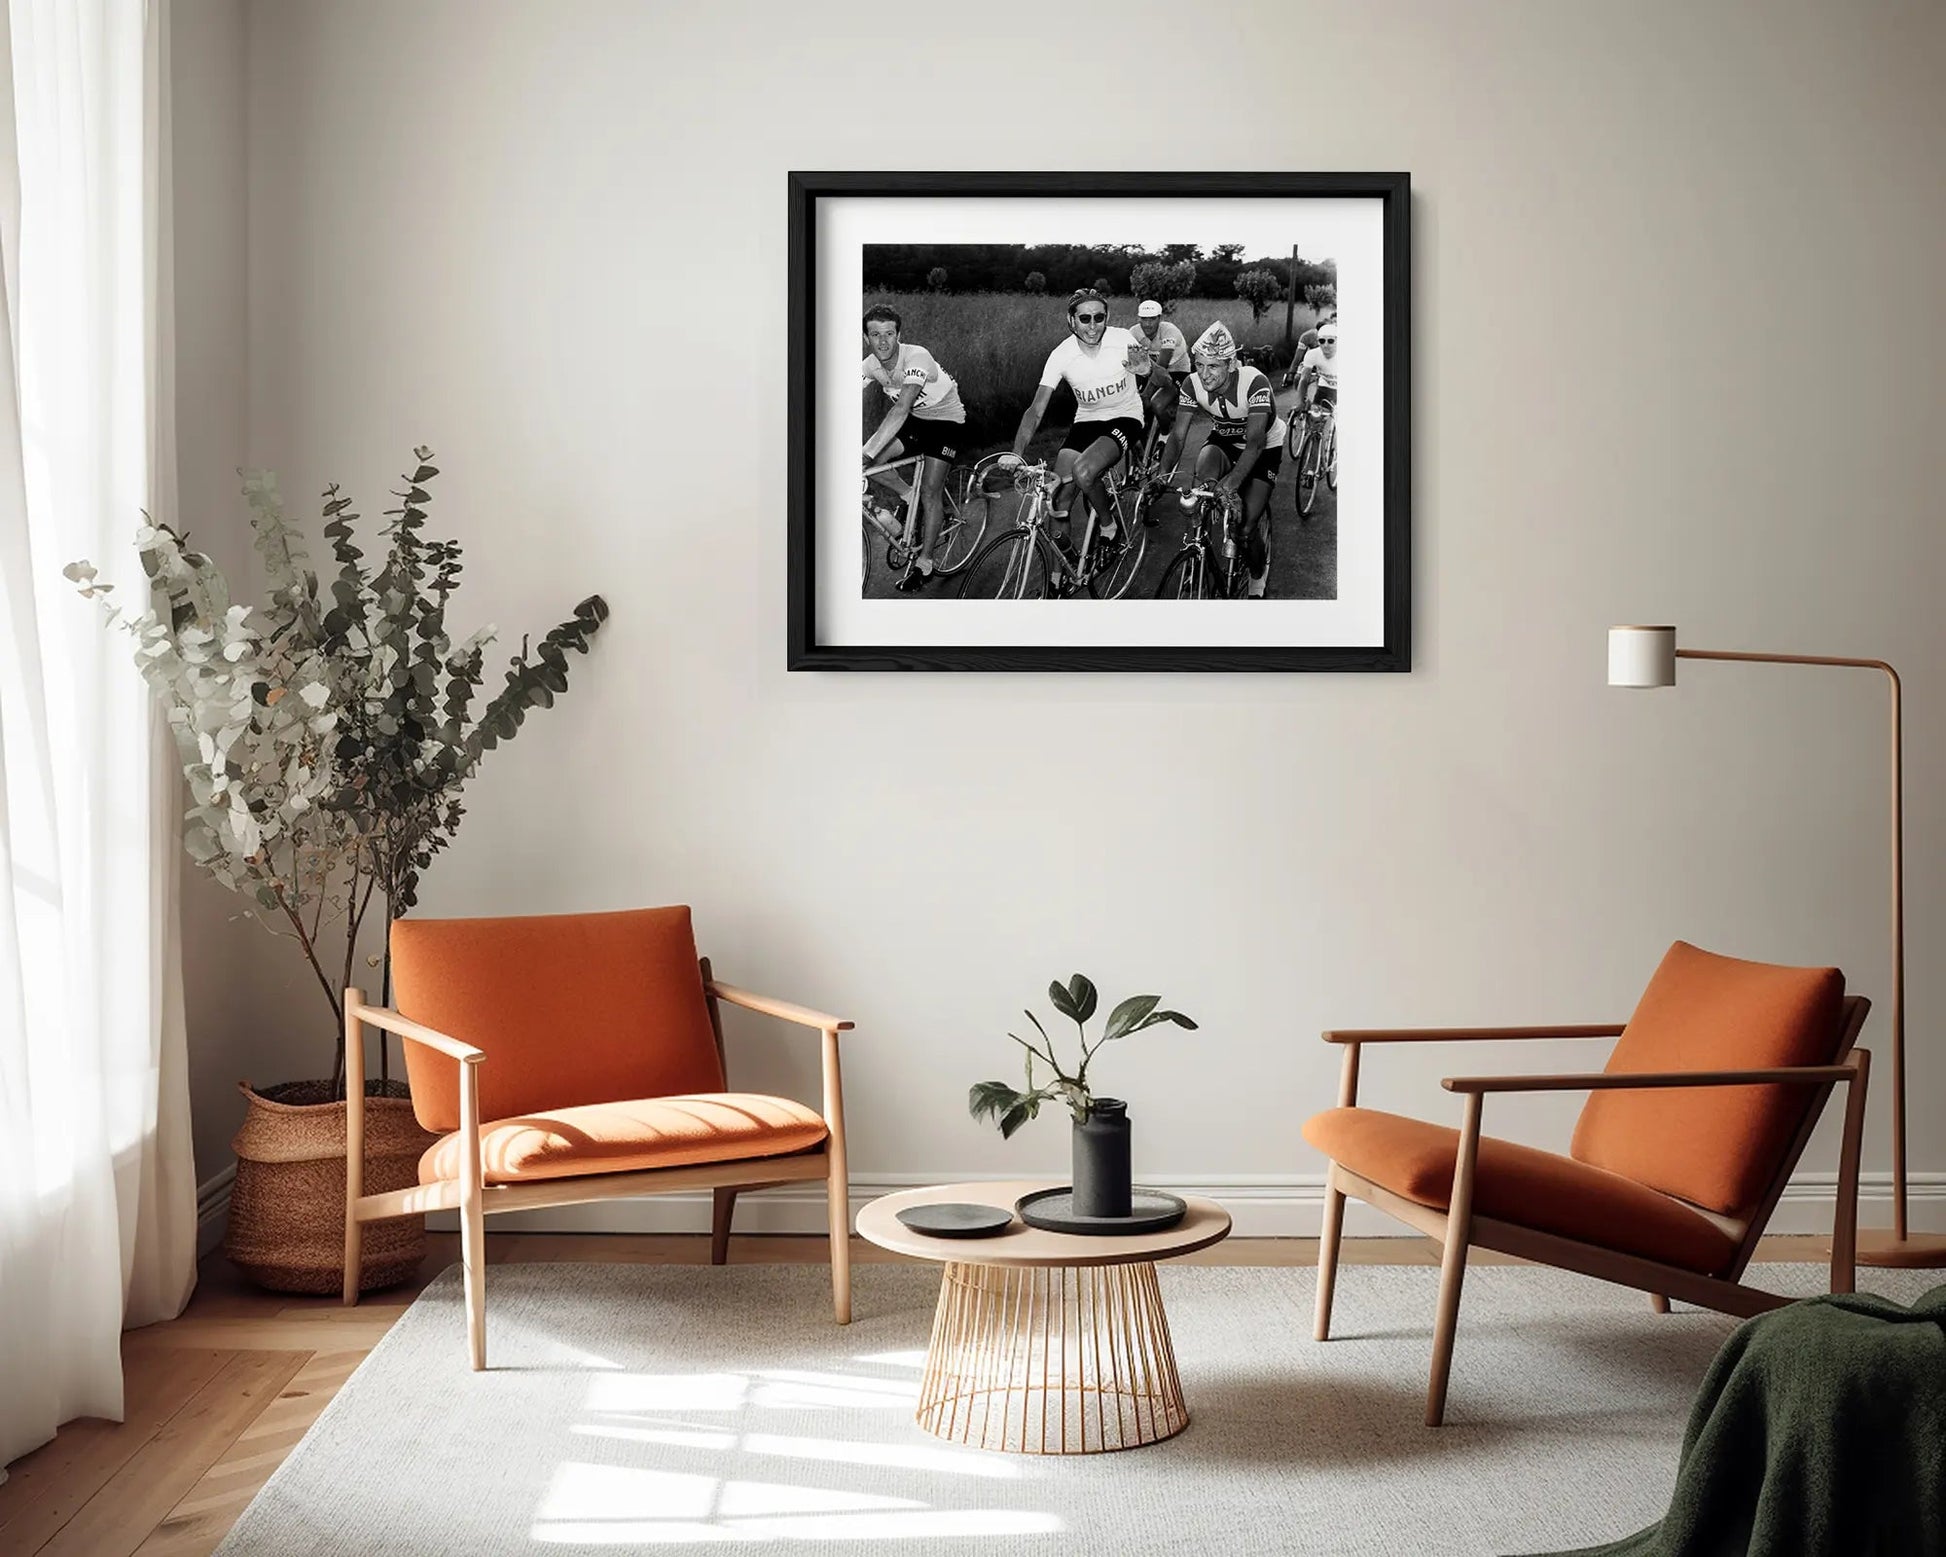 Giacchero, Coppi e Pettinati, Giro d'Italia 1952 - Farabola Fotografia